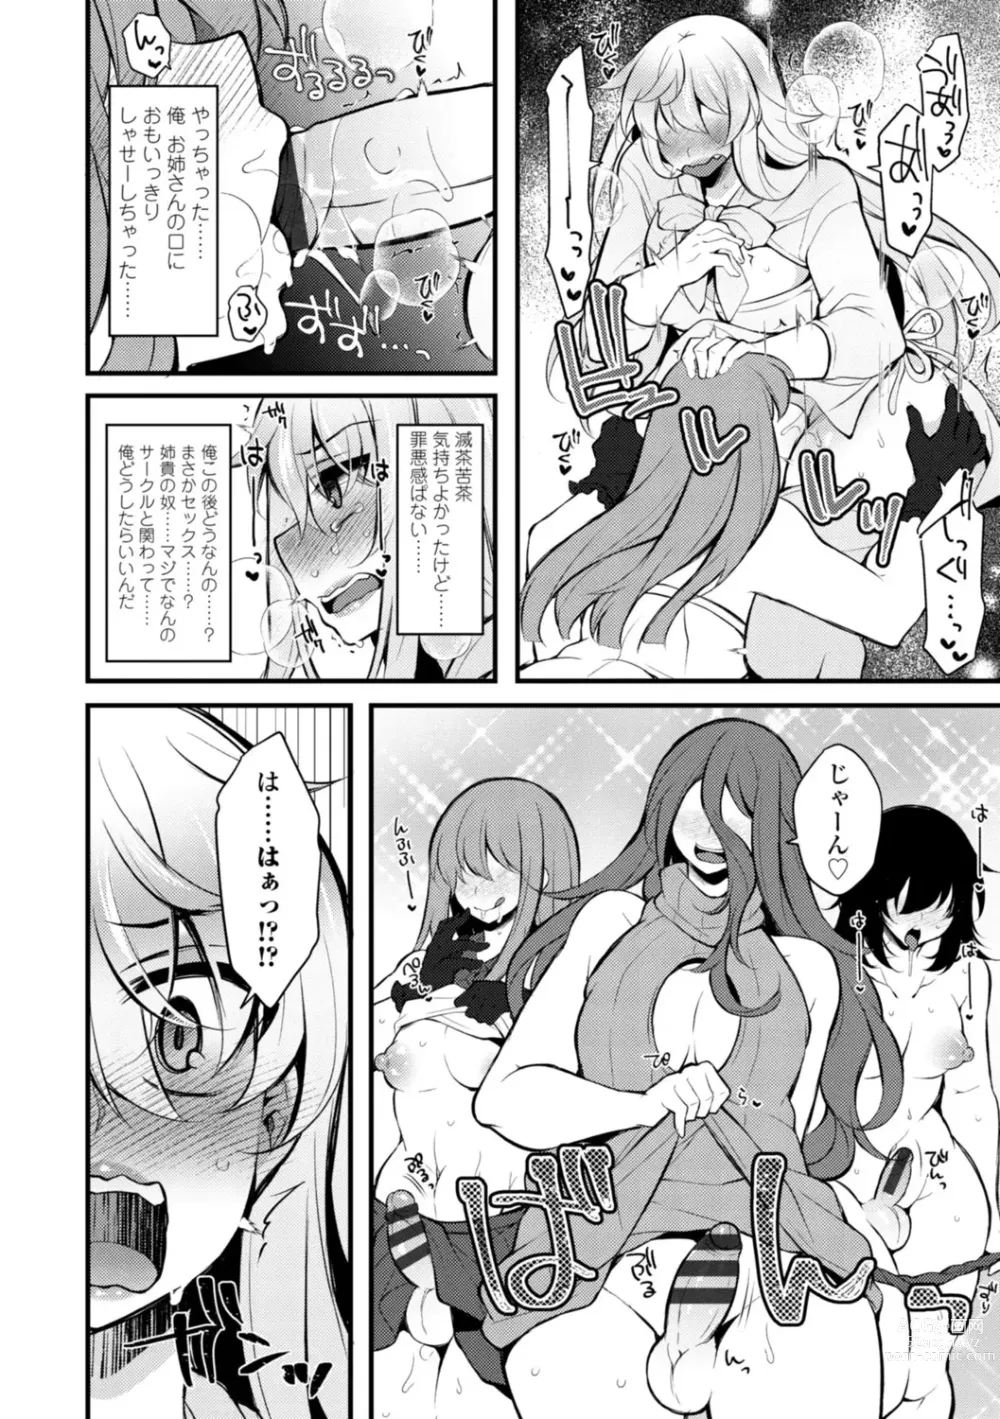 Page 178 of manga Onnanoko-sama no Iu Toori